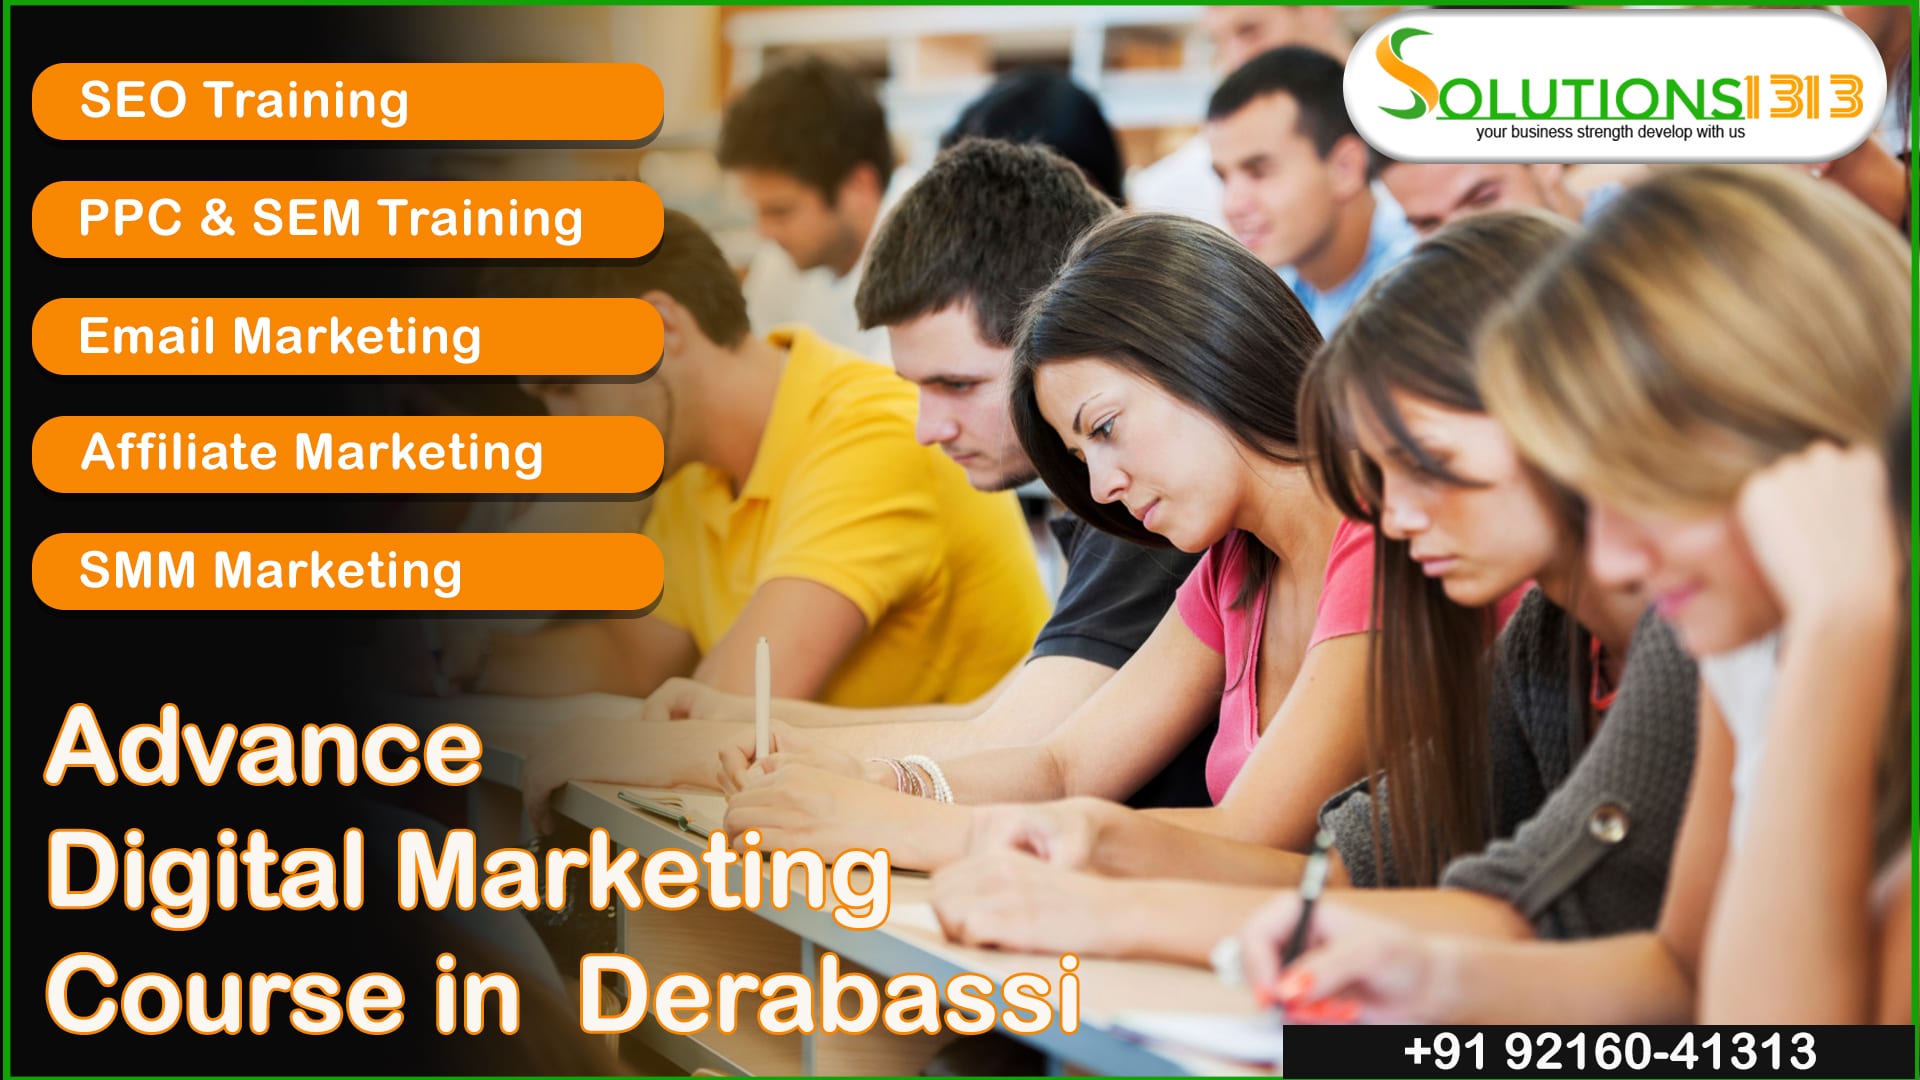 Digital Marketing Course in Derabassi